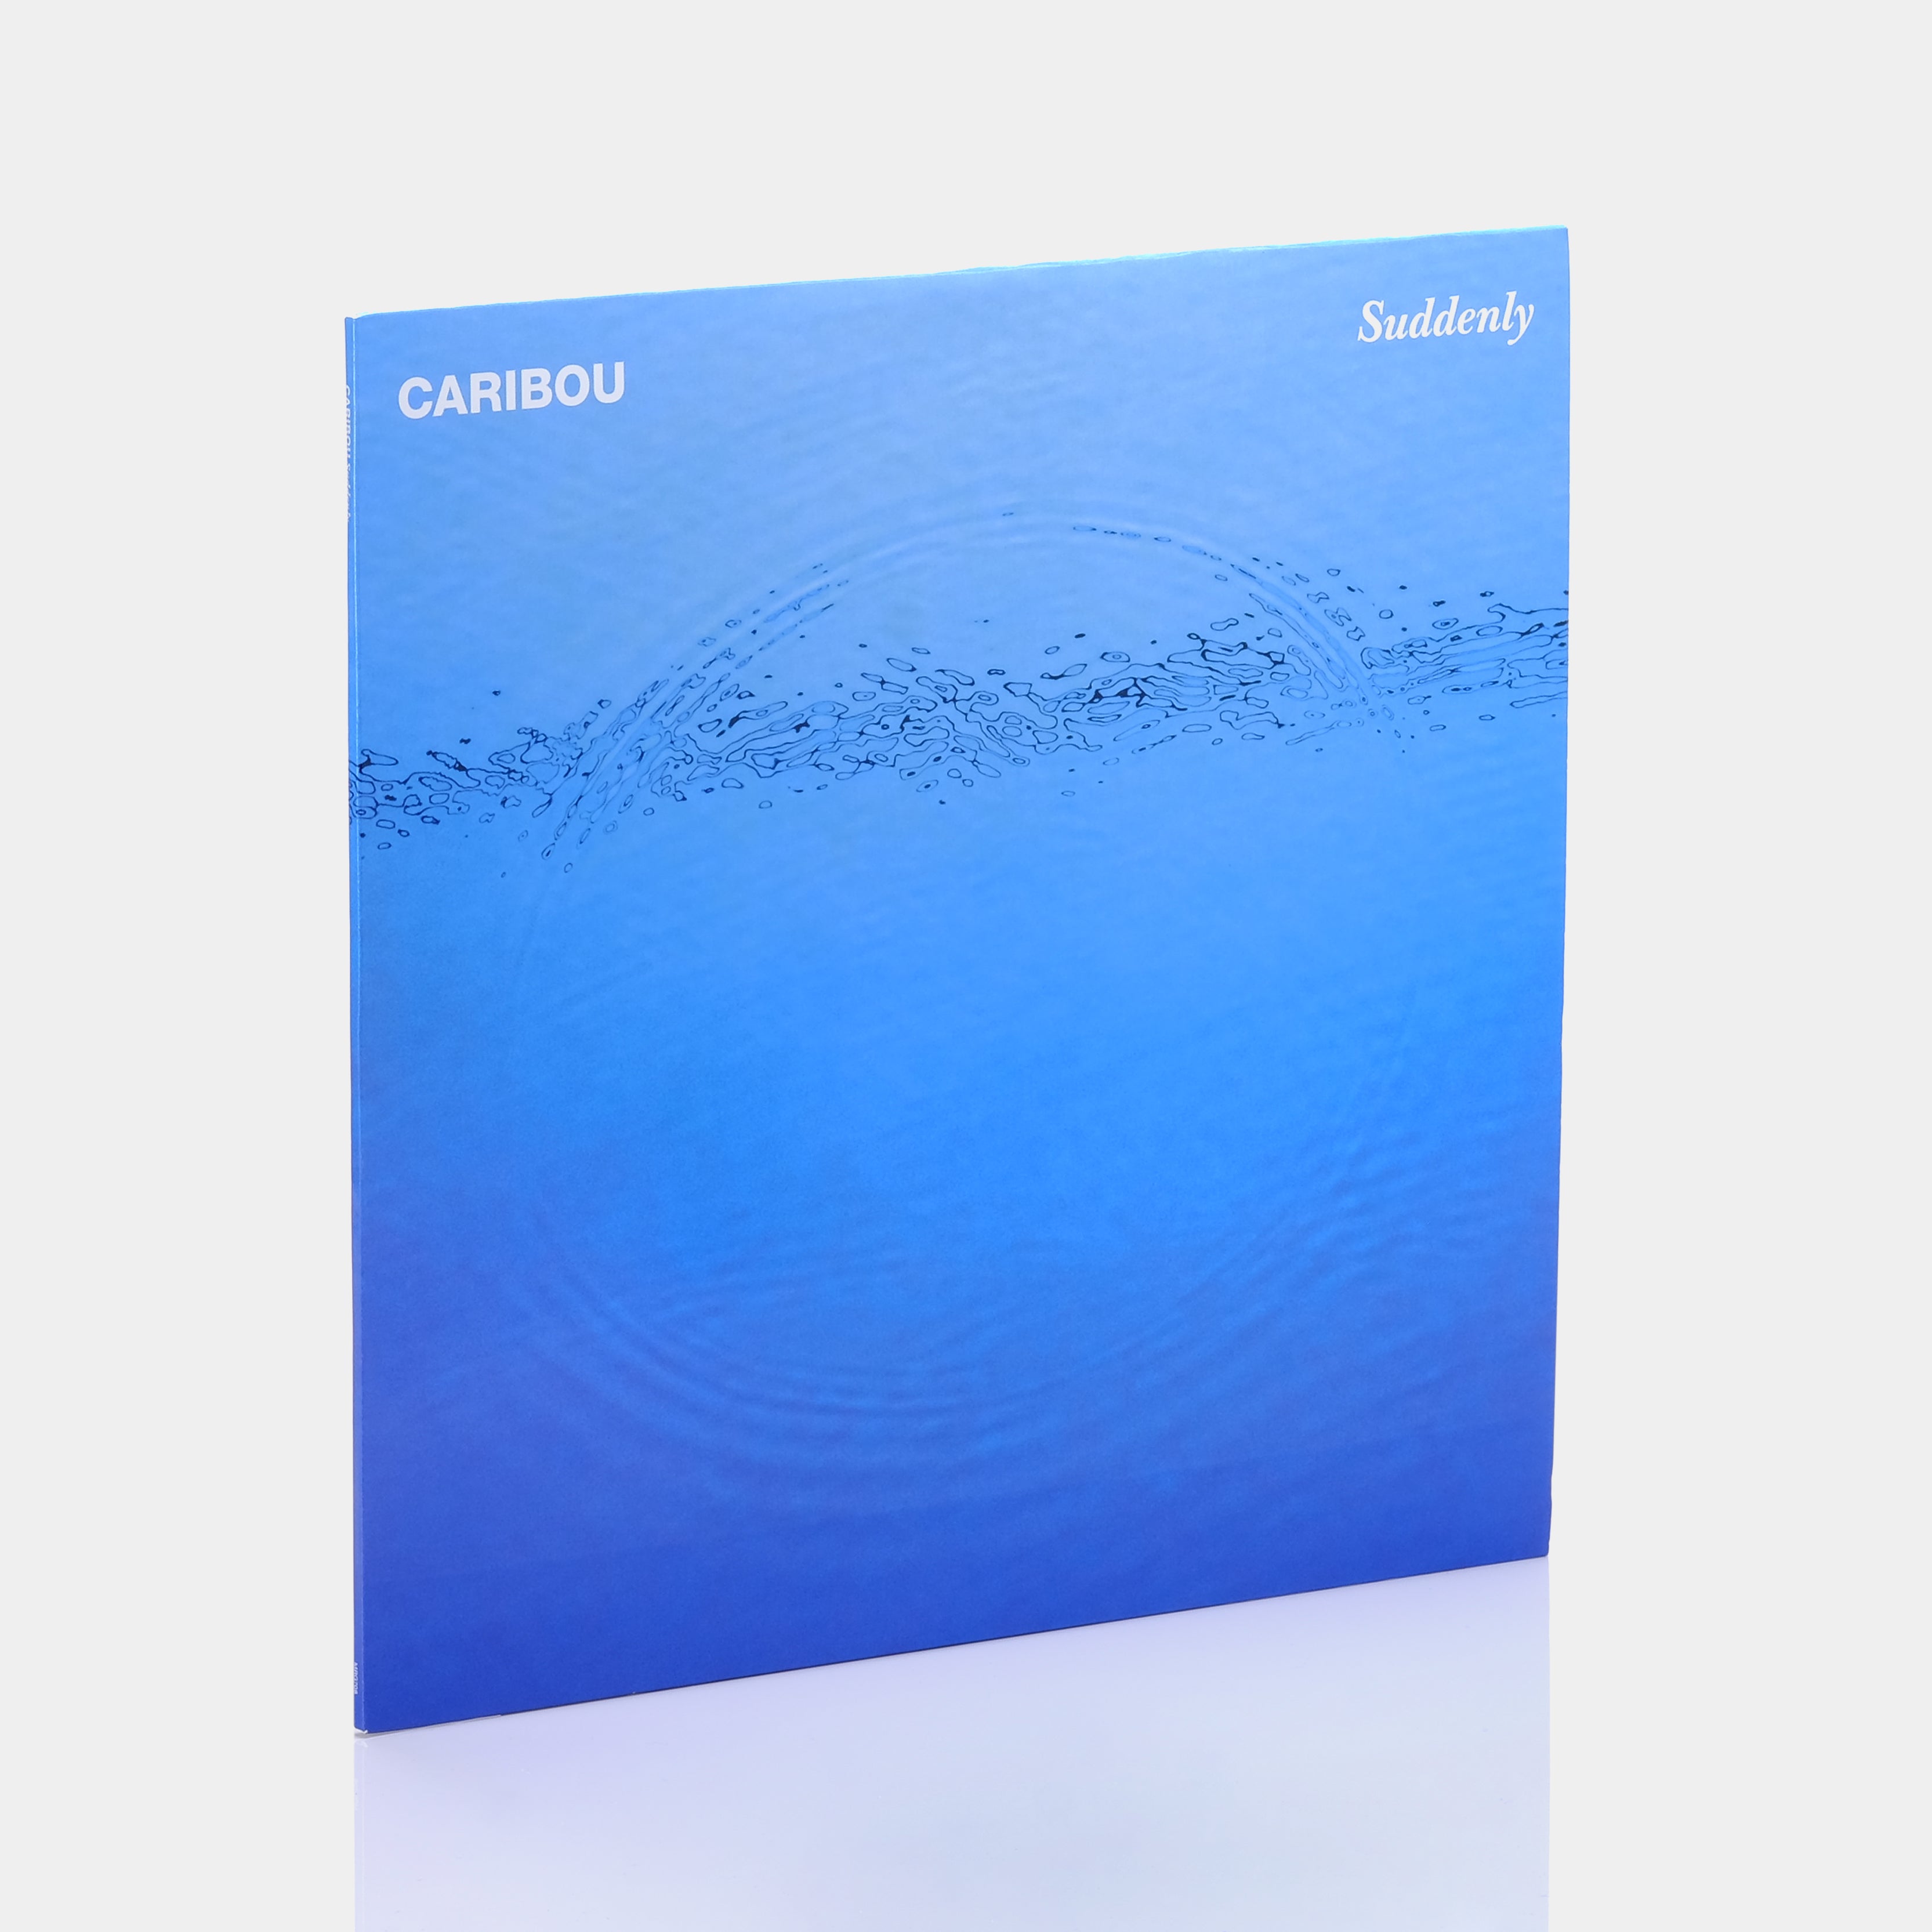 Caribou - Suddenly LP Vinyl Record